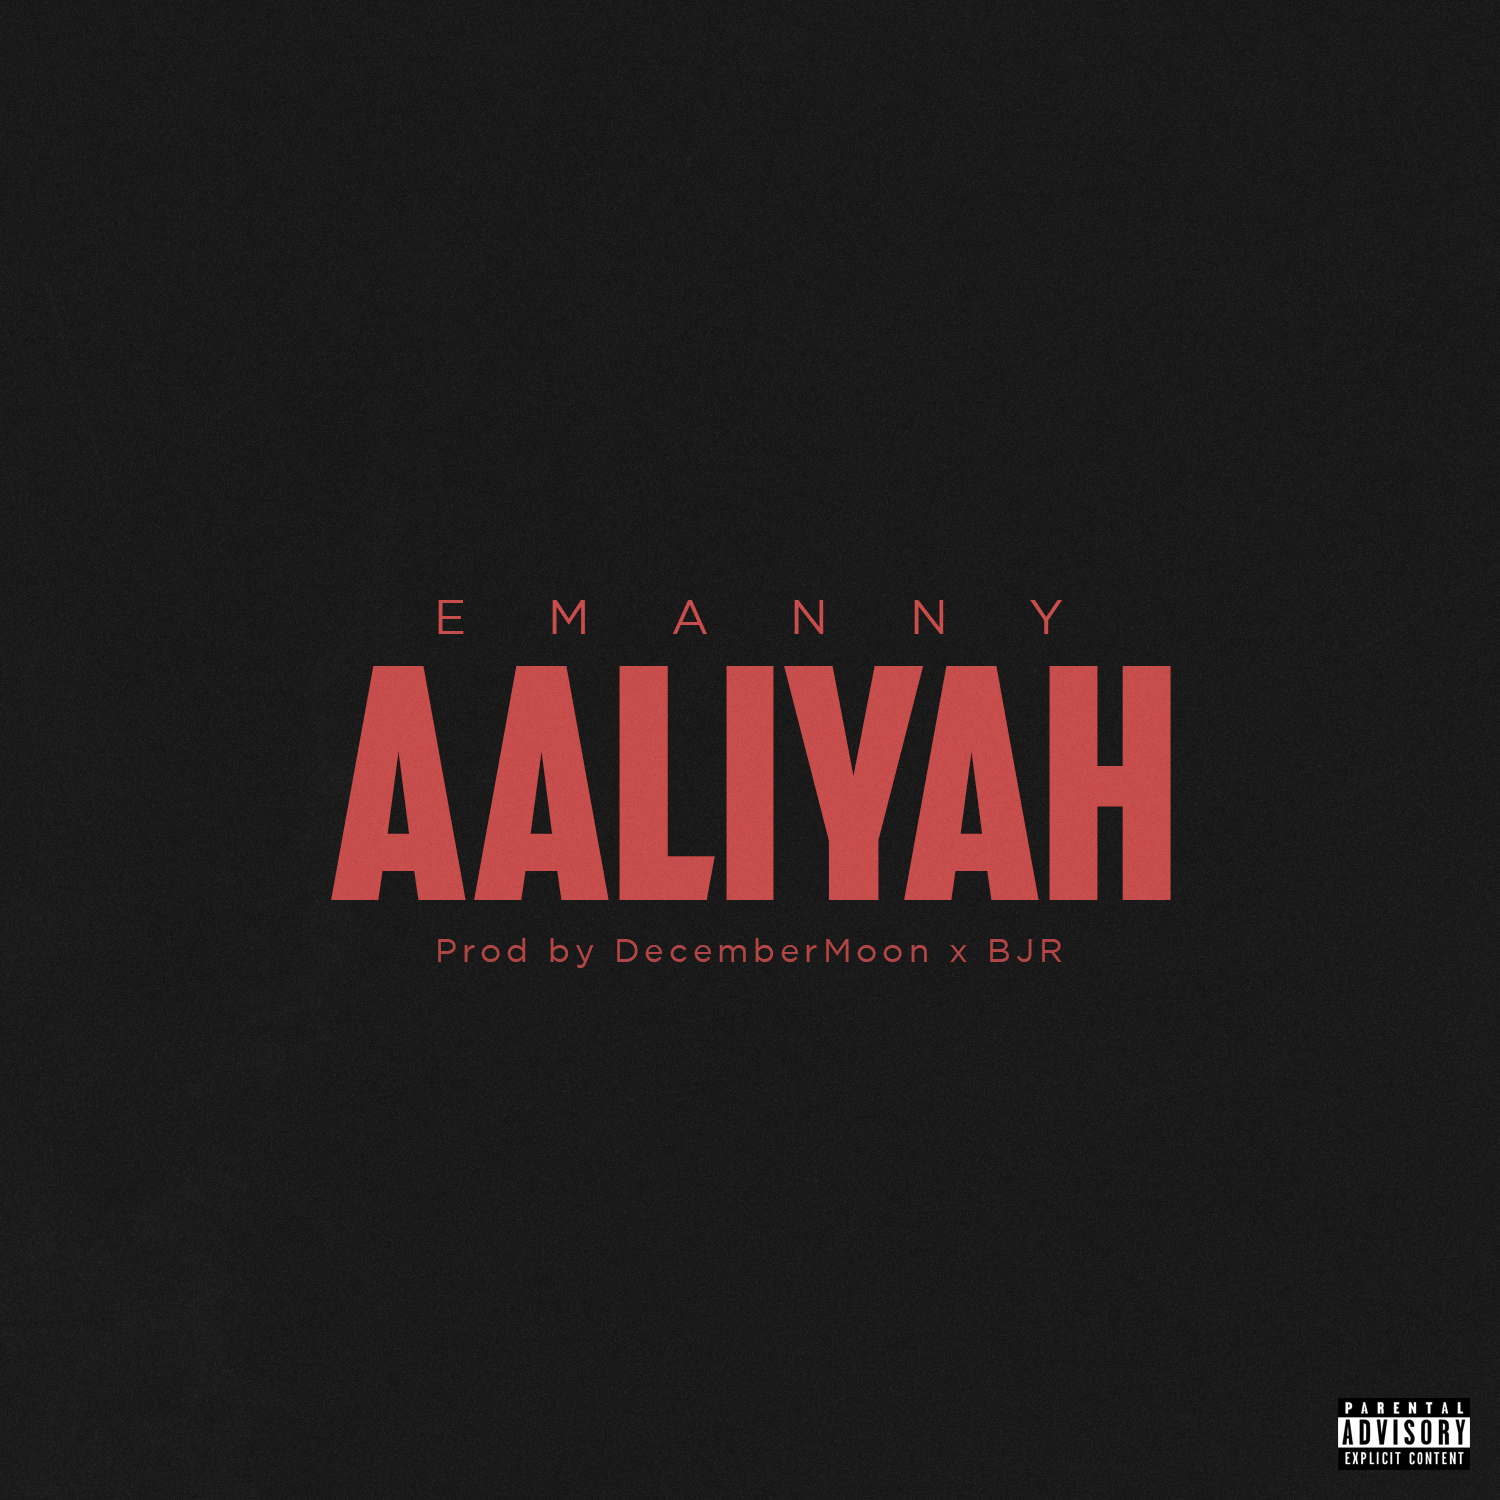 New Music: Emanny - Aaliyah